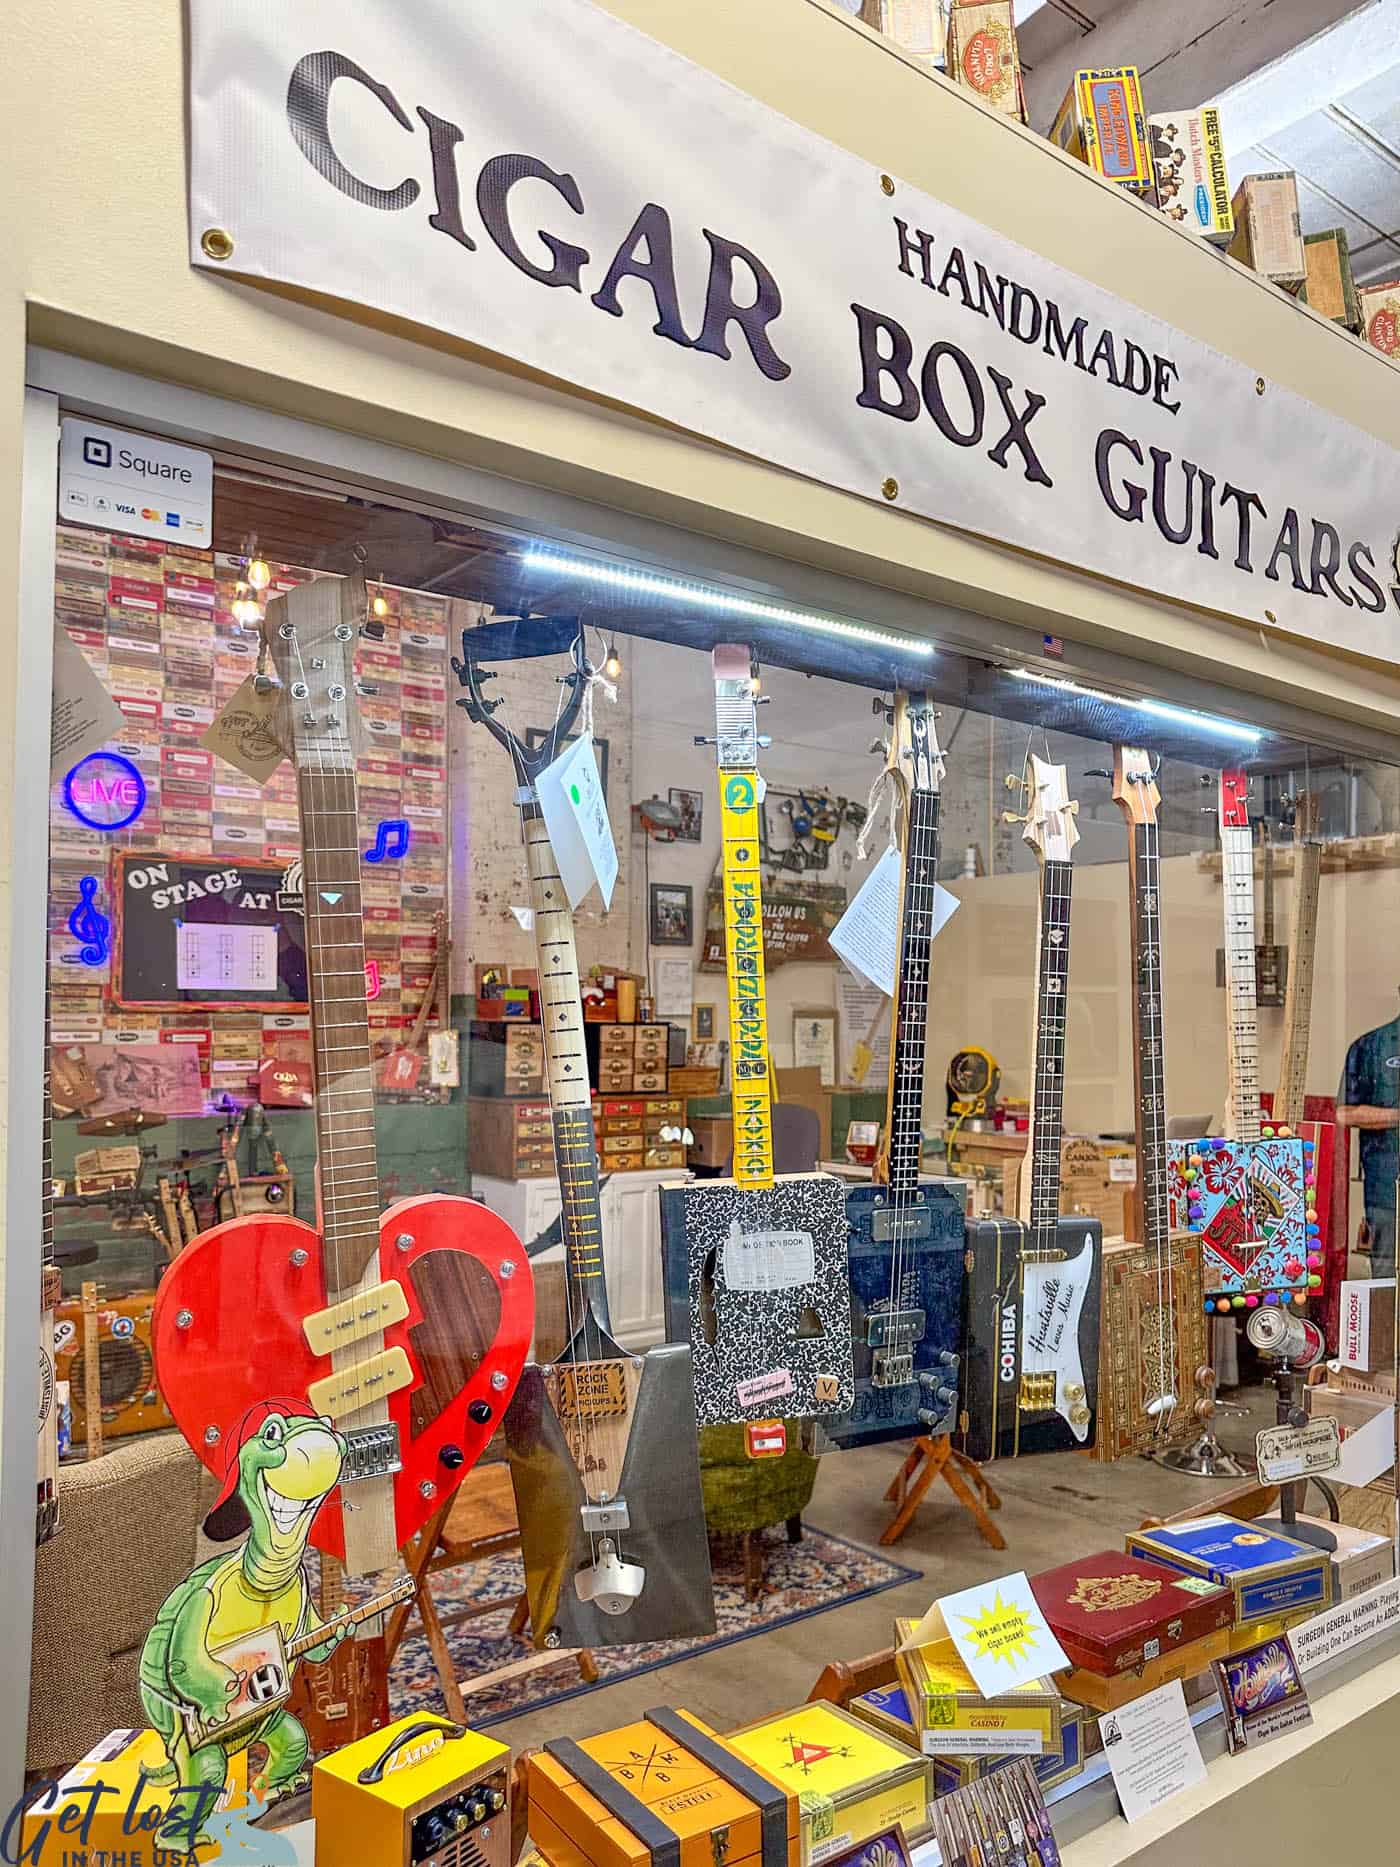 Cigar Box Guitars sign